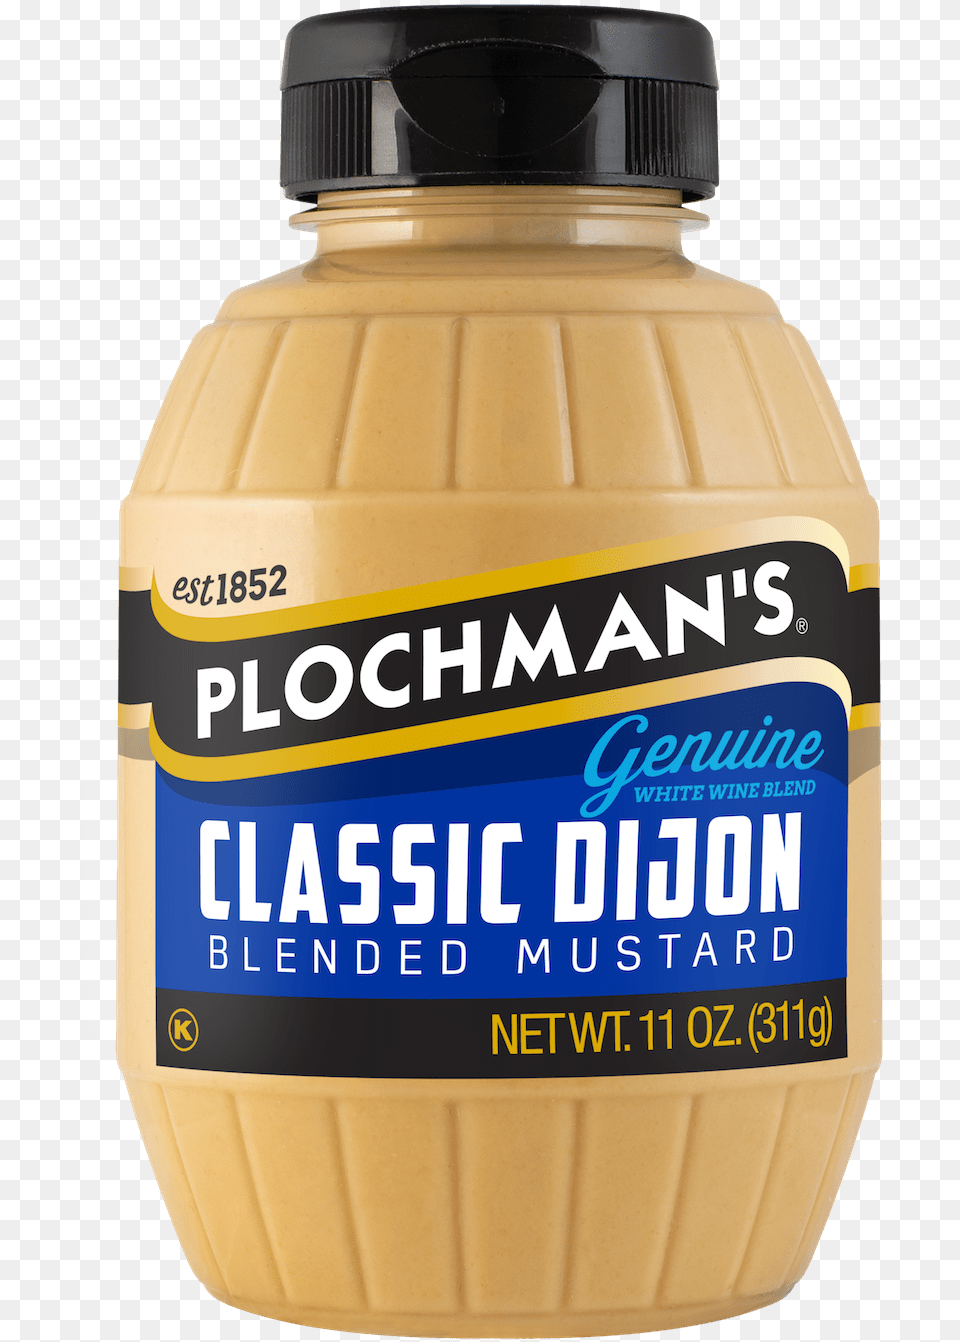 Classic Dijion Mustard In 11oz Barrel Bottle Sunnyd, Food, Peanut Butter, Ketchup Free Png